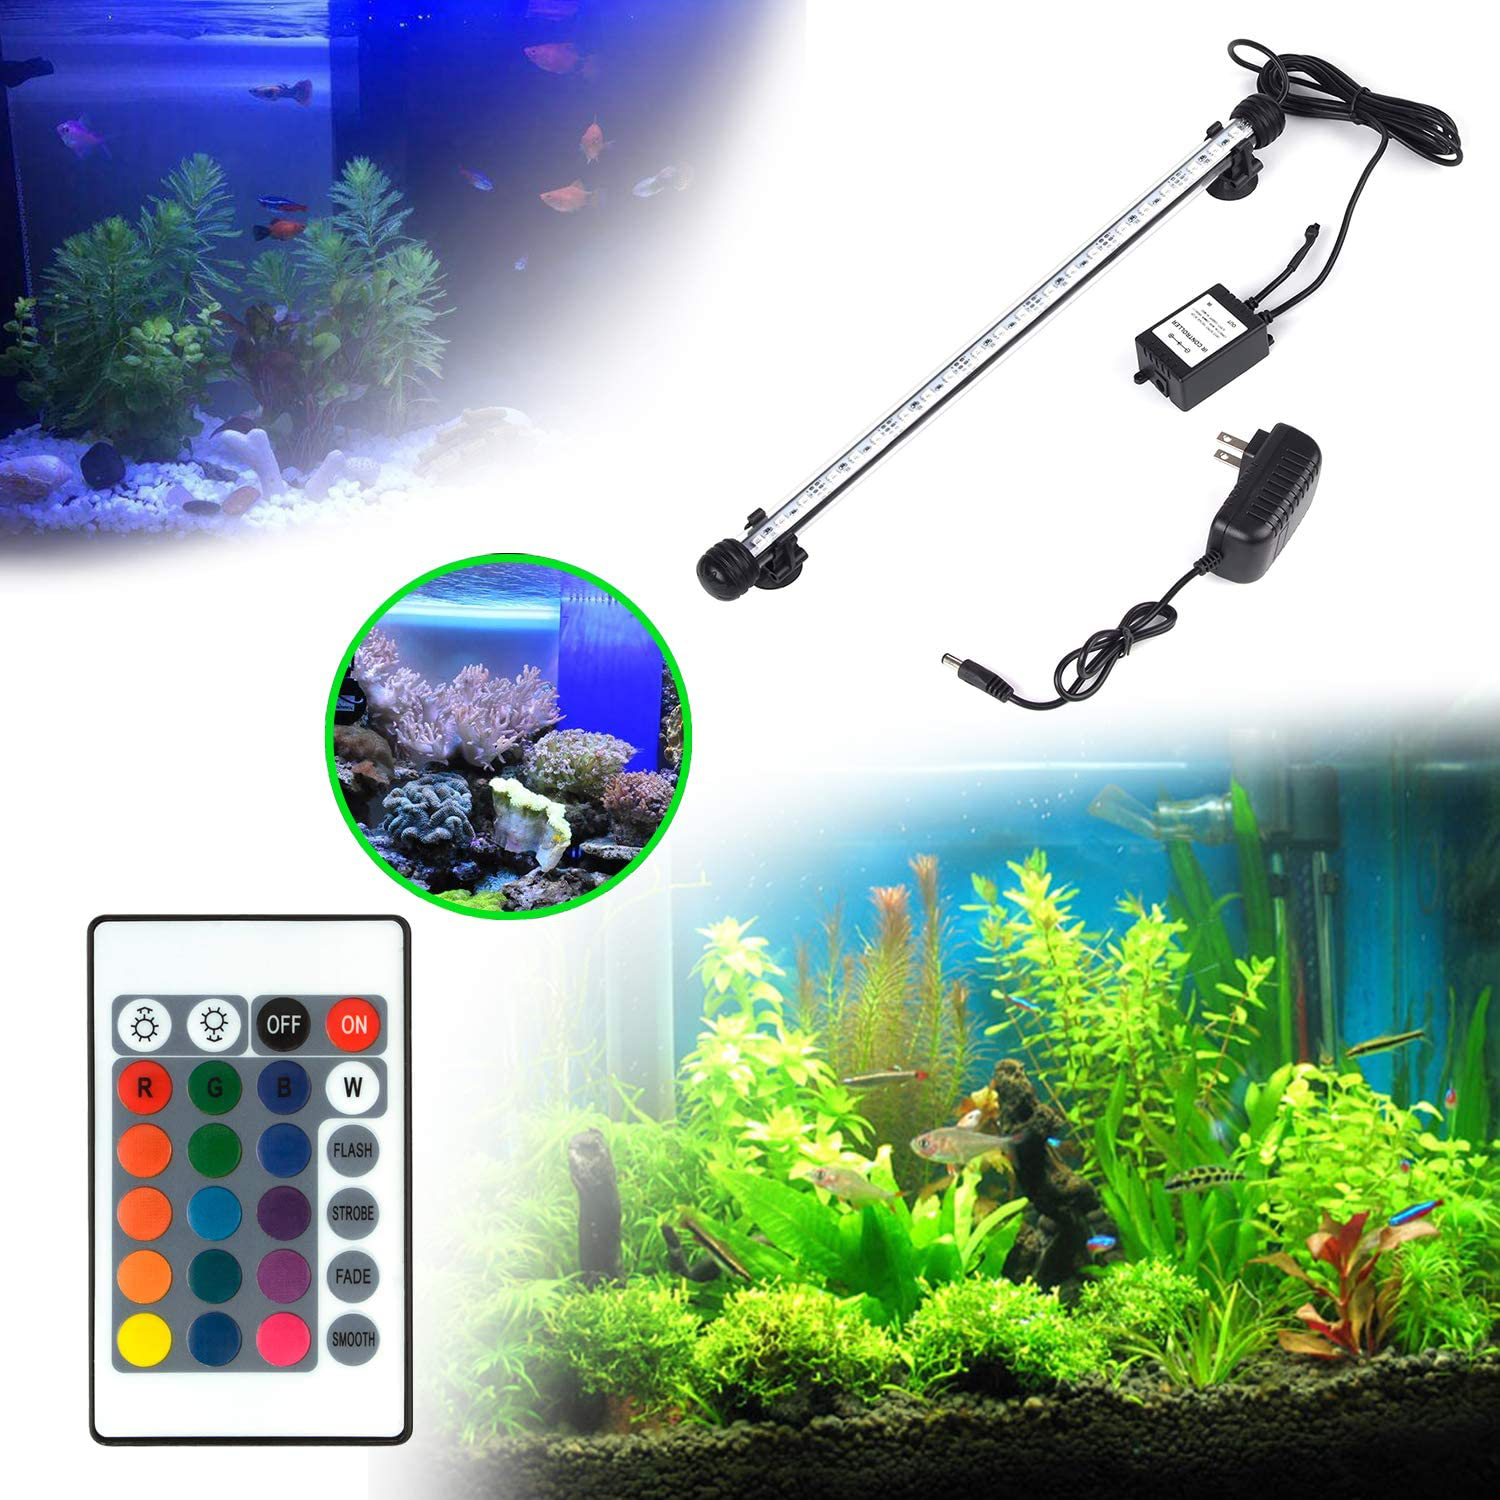 LED Aquarium Light, Fish Tank Lights Waterproof RGB Color Change Lighting Underwater Submersible LED Lighting Strip Background Decrate Light -15'